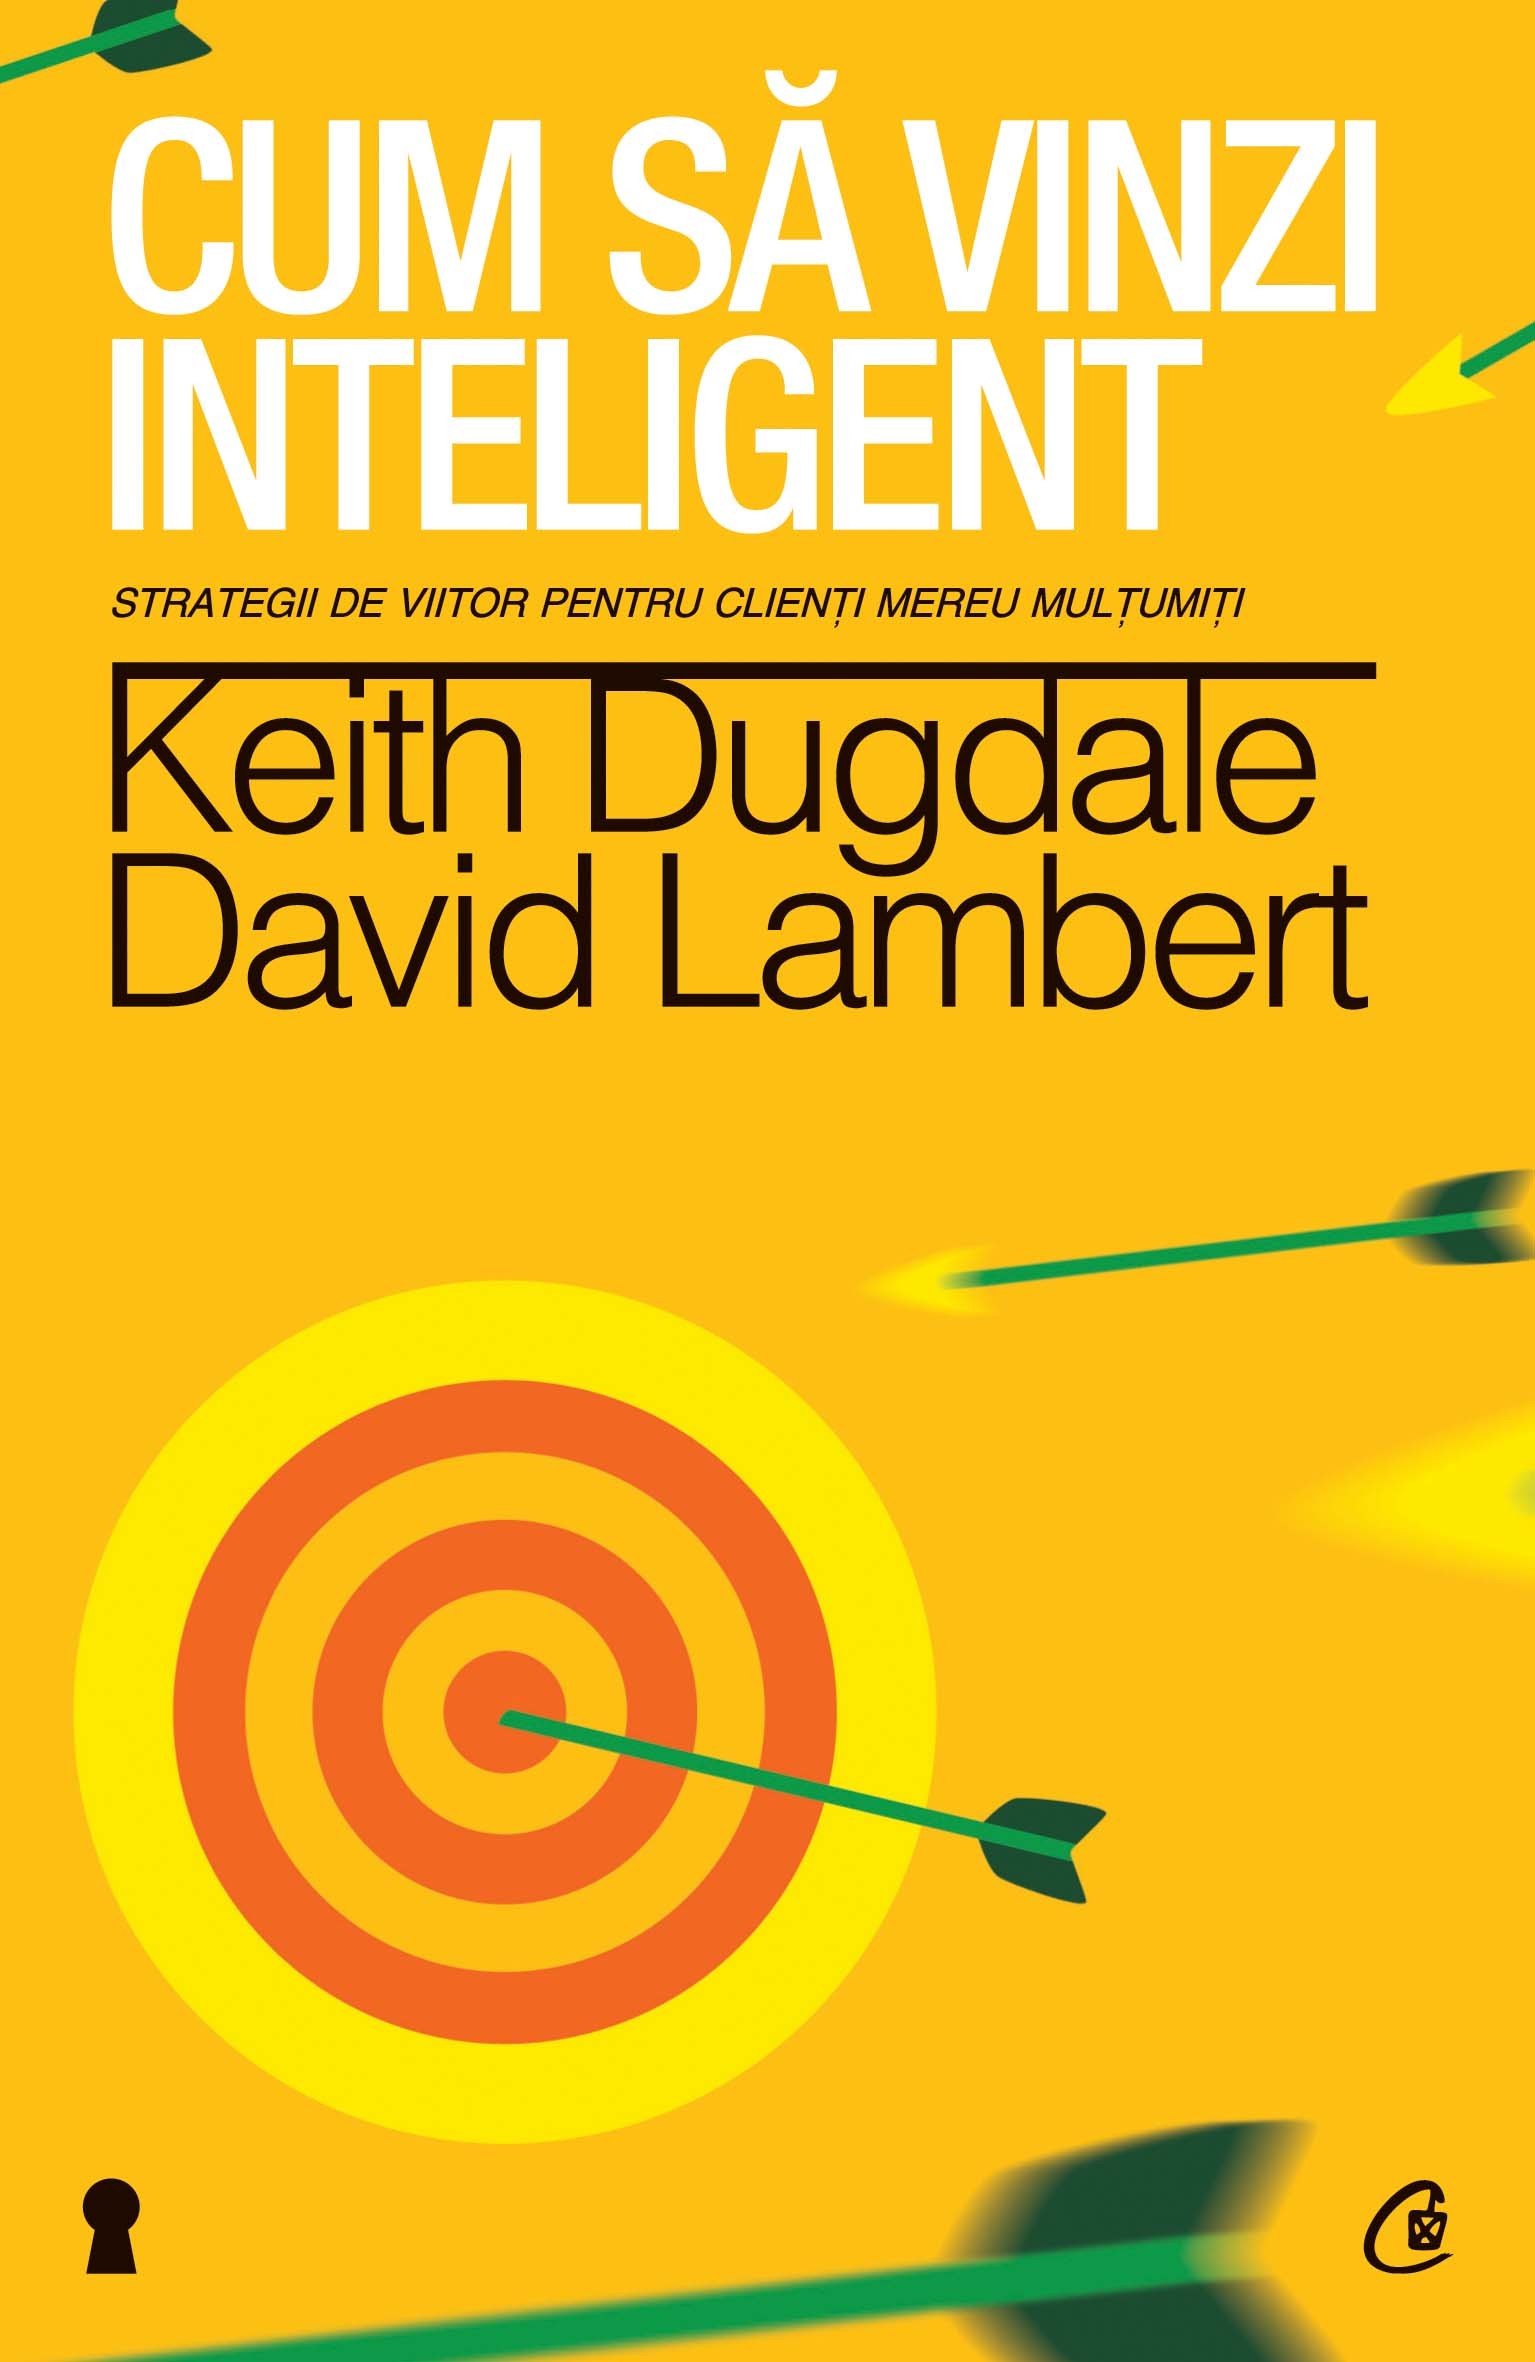 Cum sa vinzi inteligent - Keith Dugdale, David Lambert